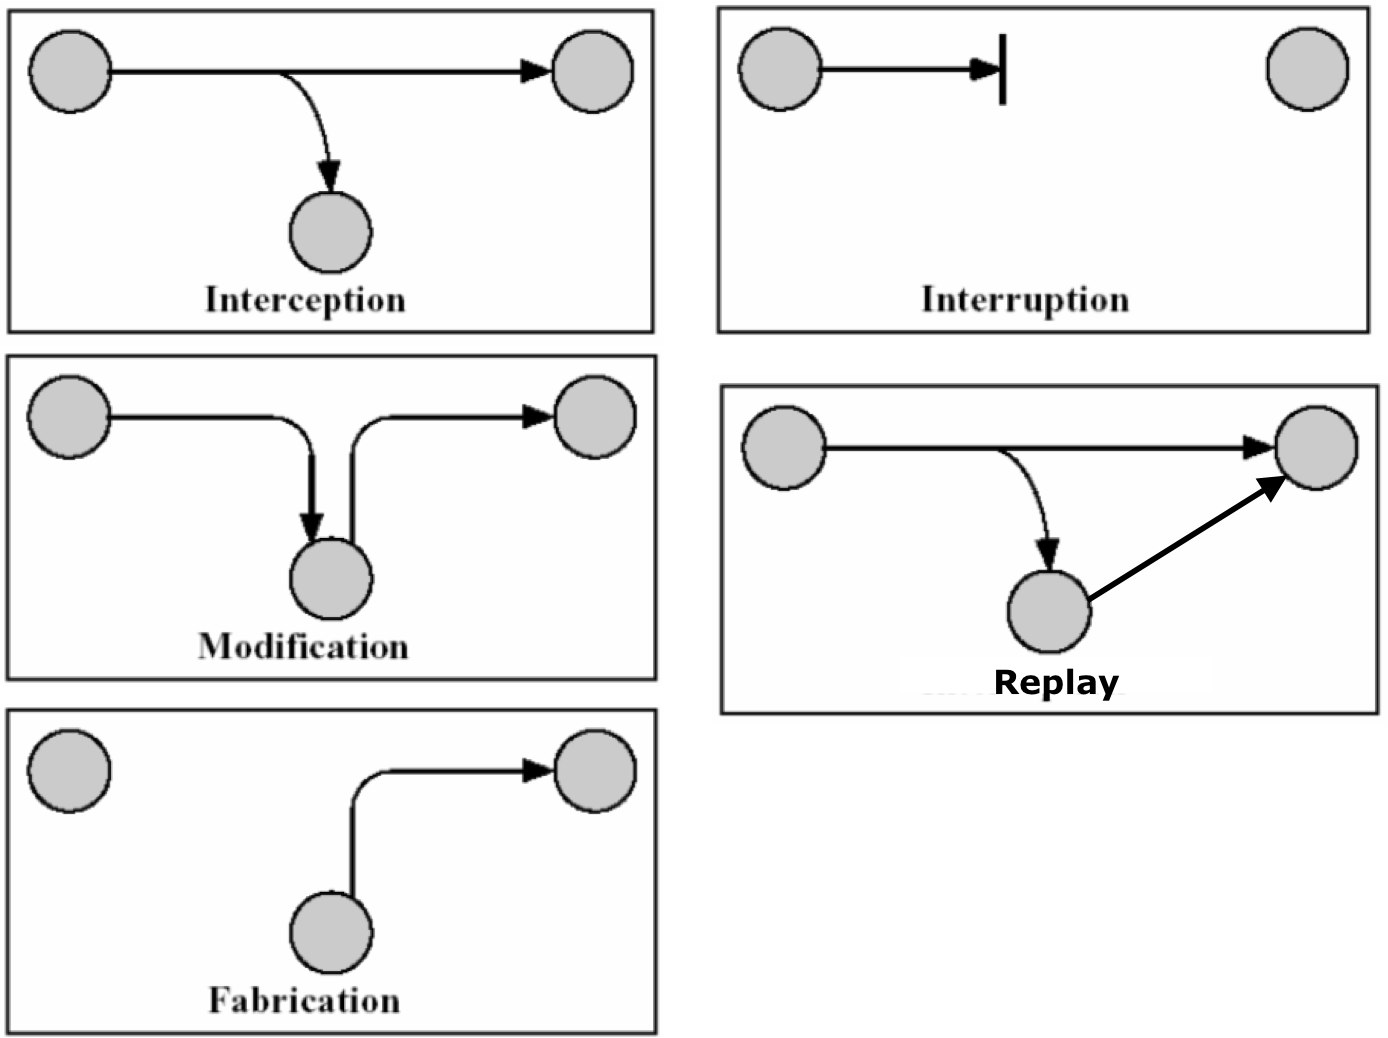 interruption interception modification and fabrication